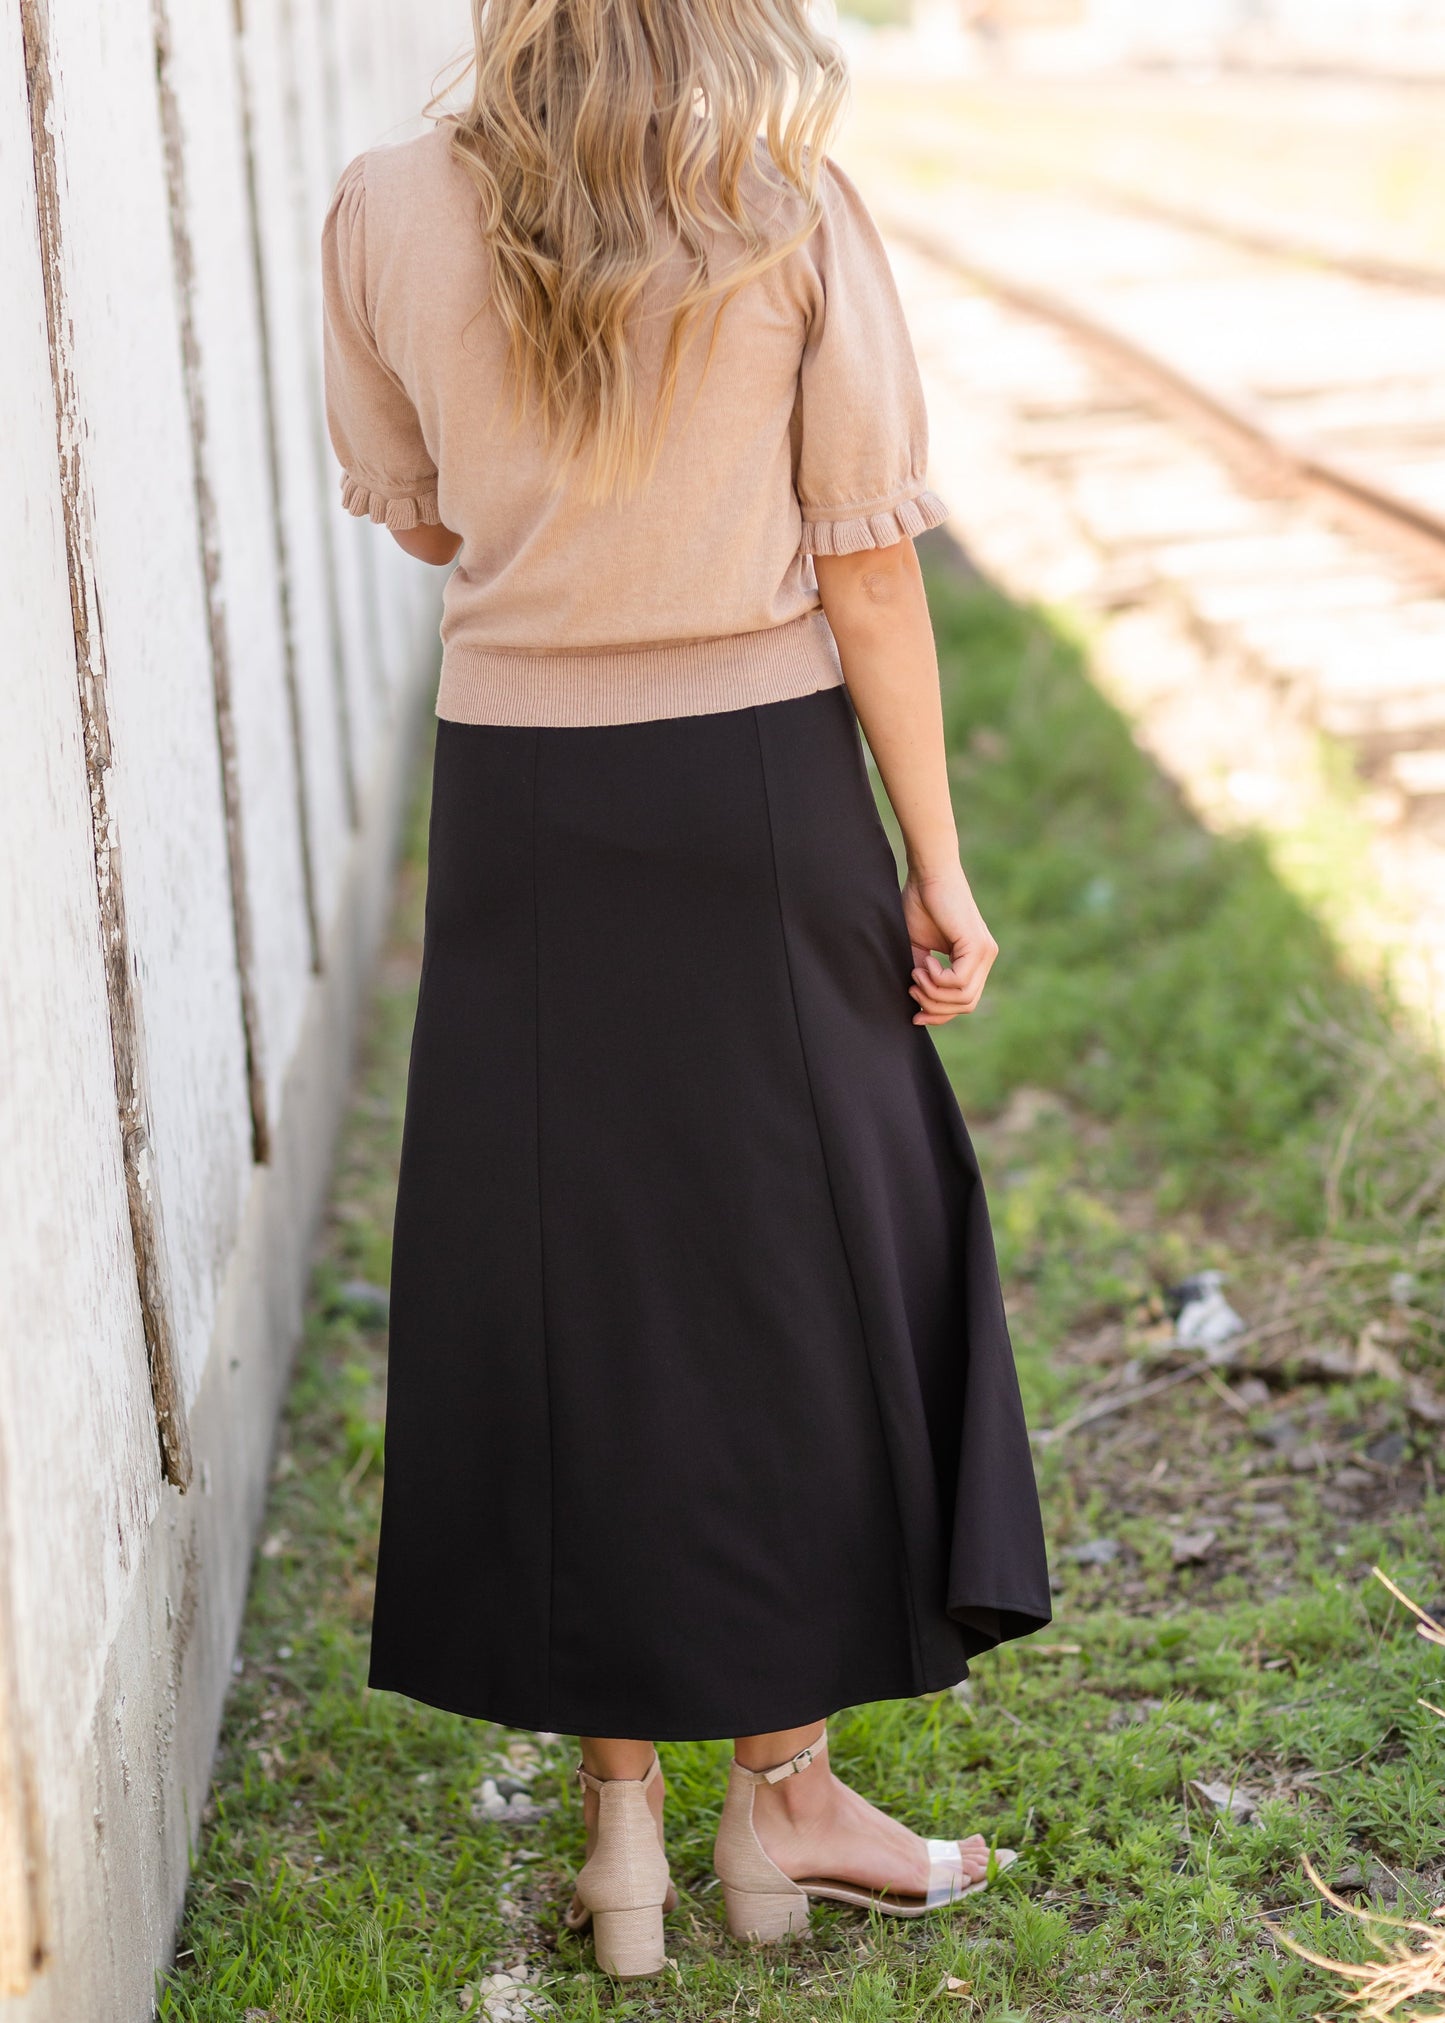 Hope Black Dress Skirt - FINAL SALE Skirts